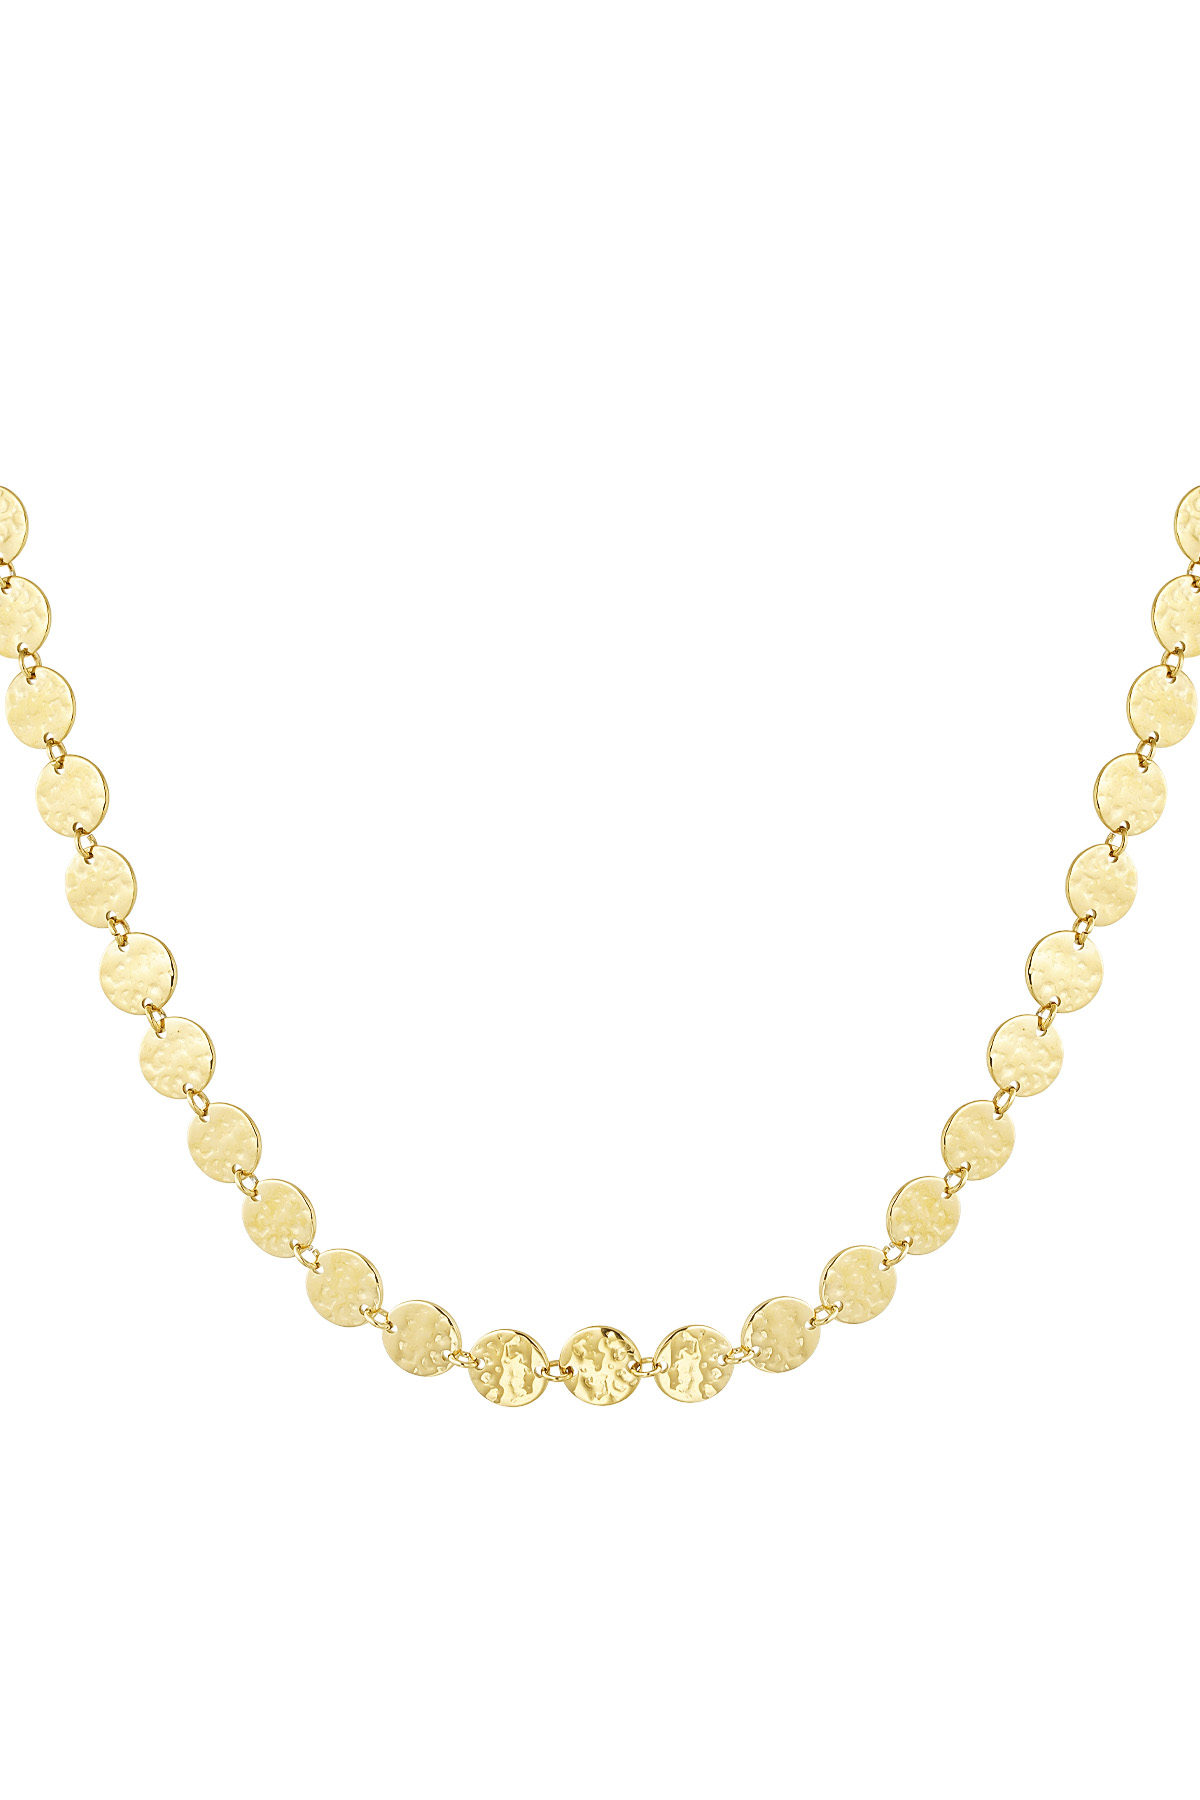 Round vintage necklace - gold h5 